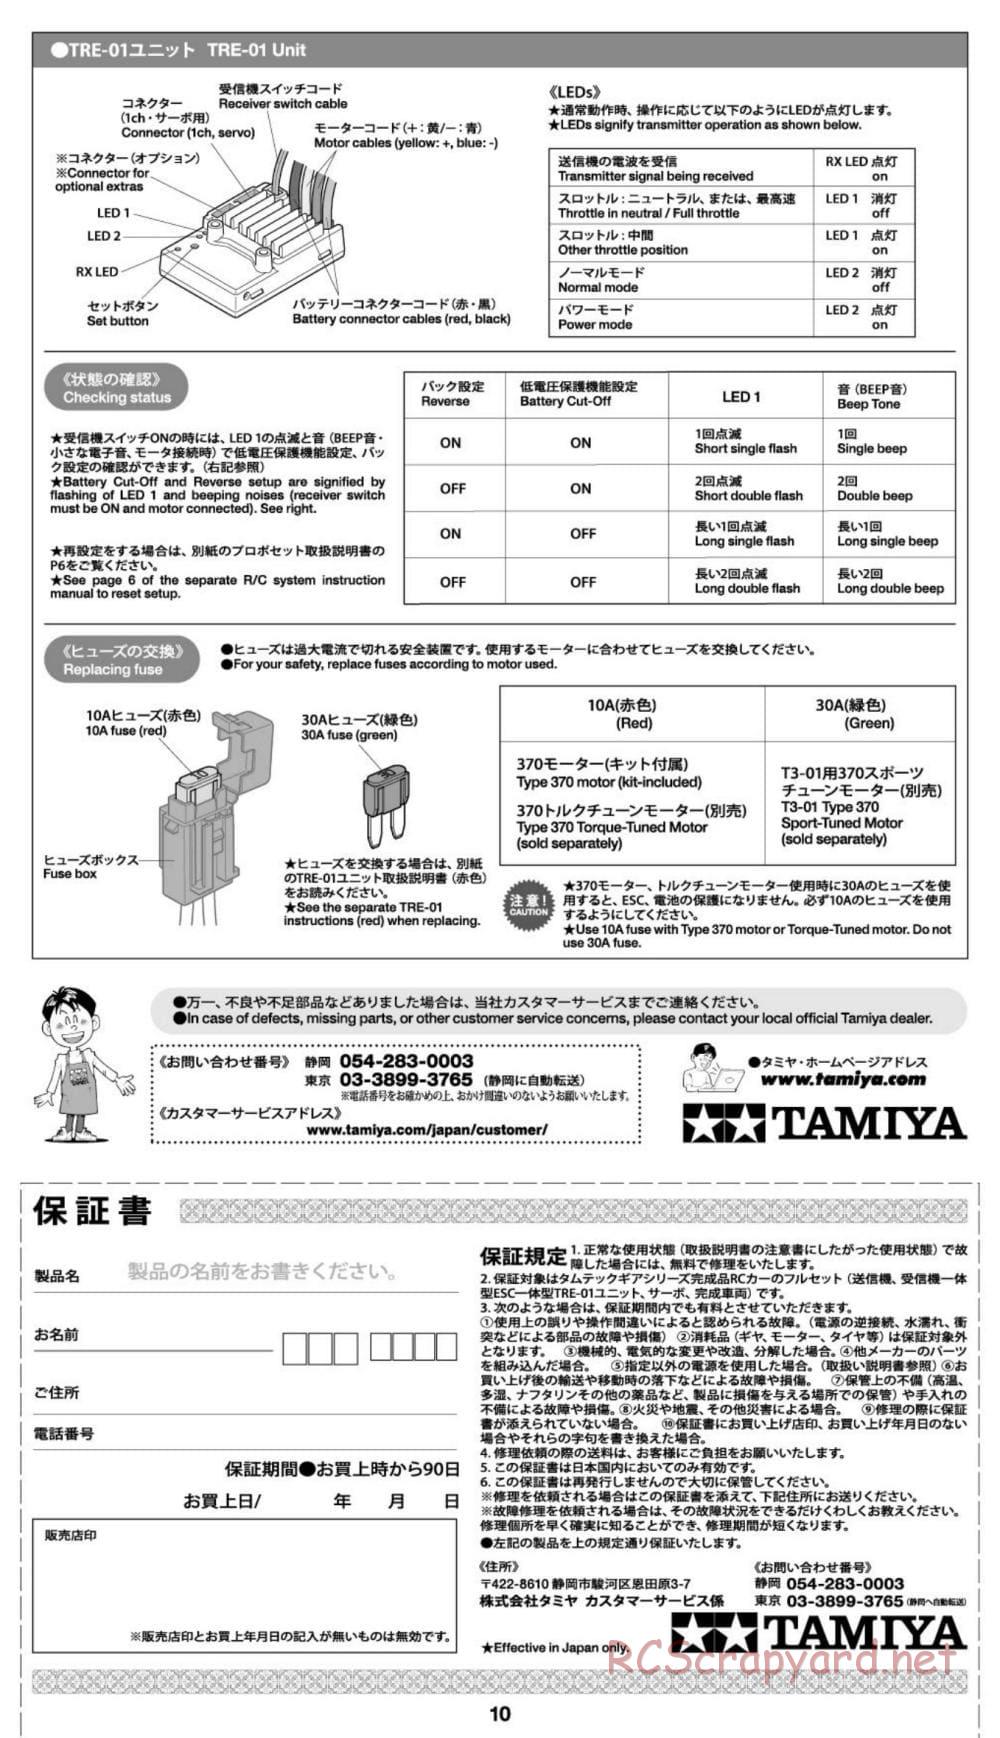 Tamiya - GB-01S Chassis - Manual - Page 10